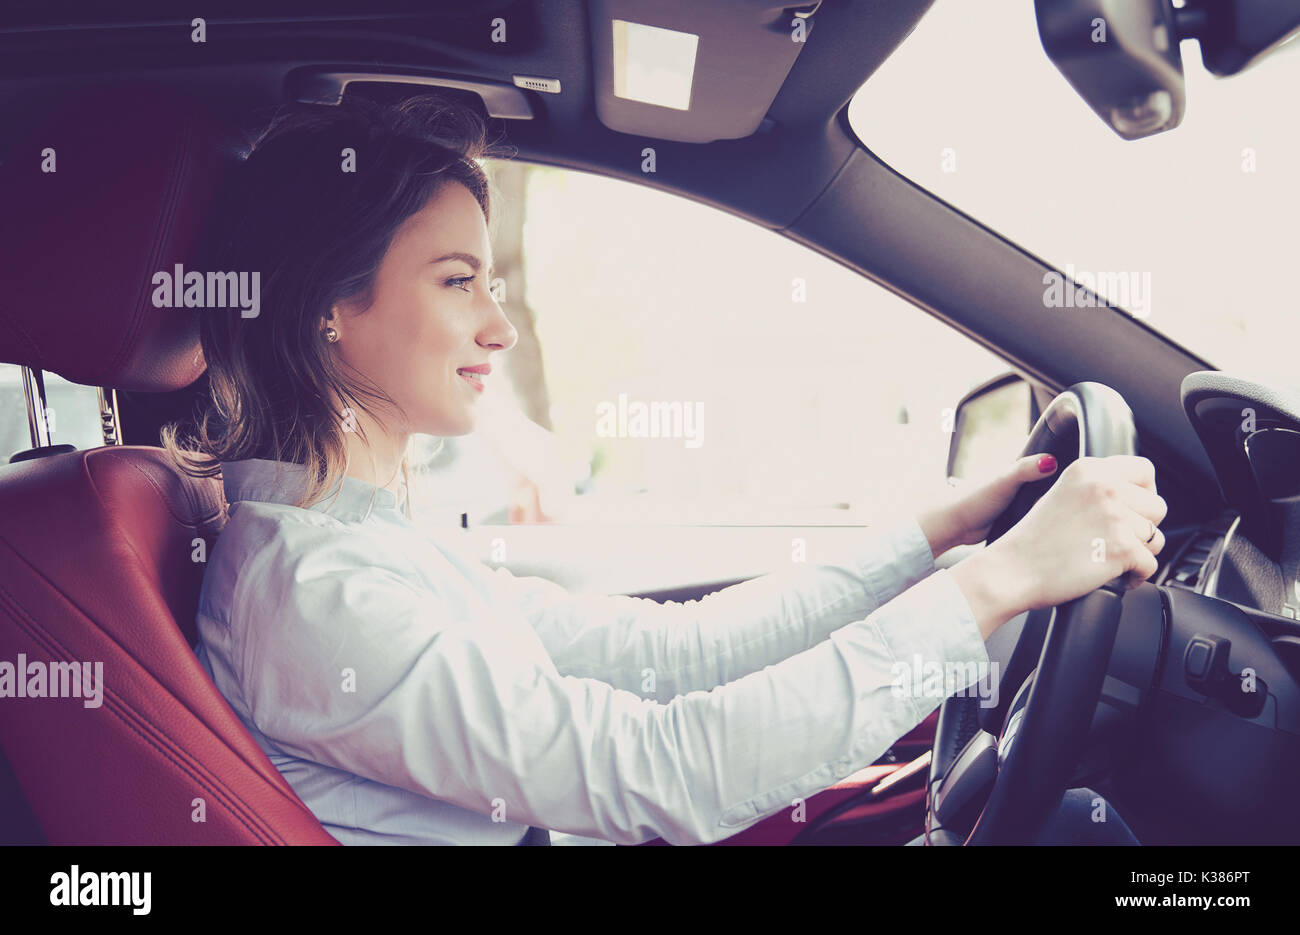 Portrait of a smiling young woman driving a car Banque D'Images